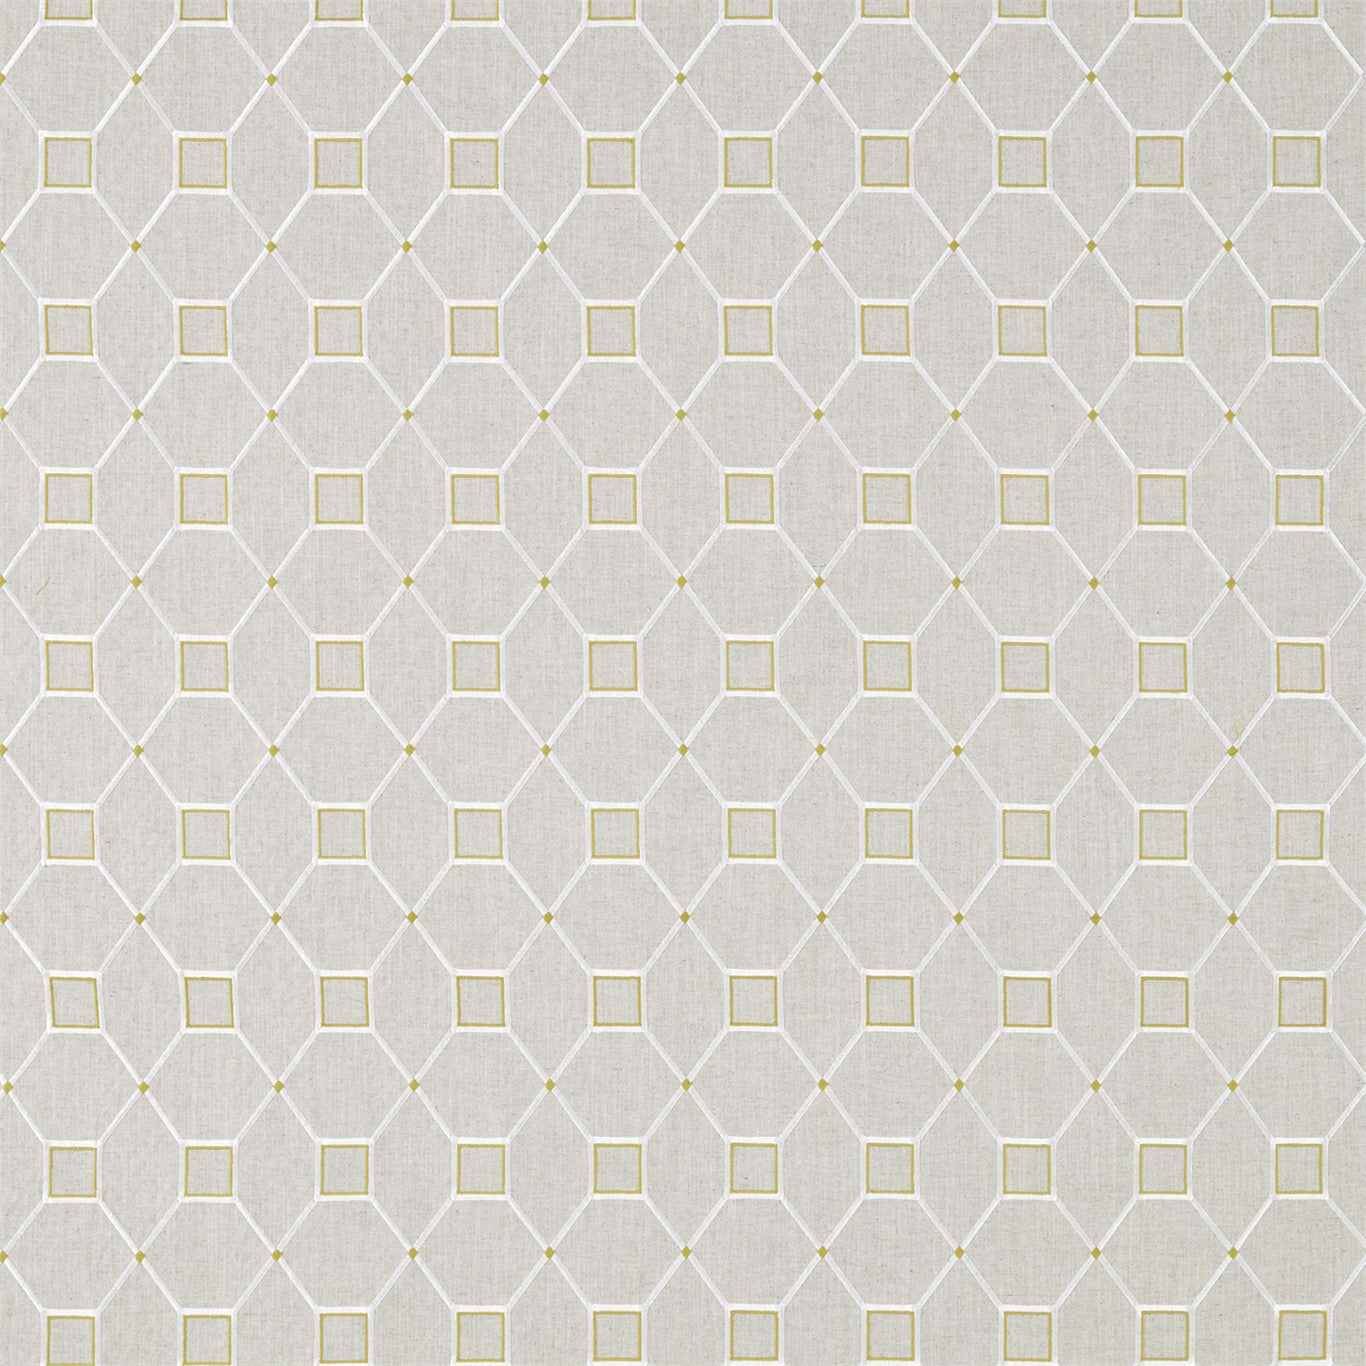 Baroque Trellis Fabric by Sanderson - DART236359 - Daffodil/Linen